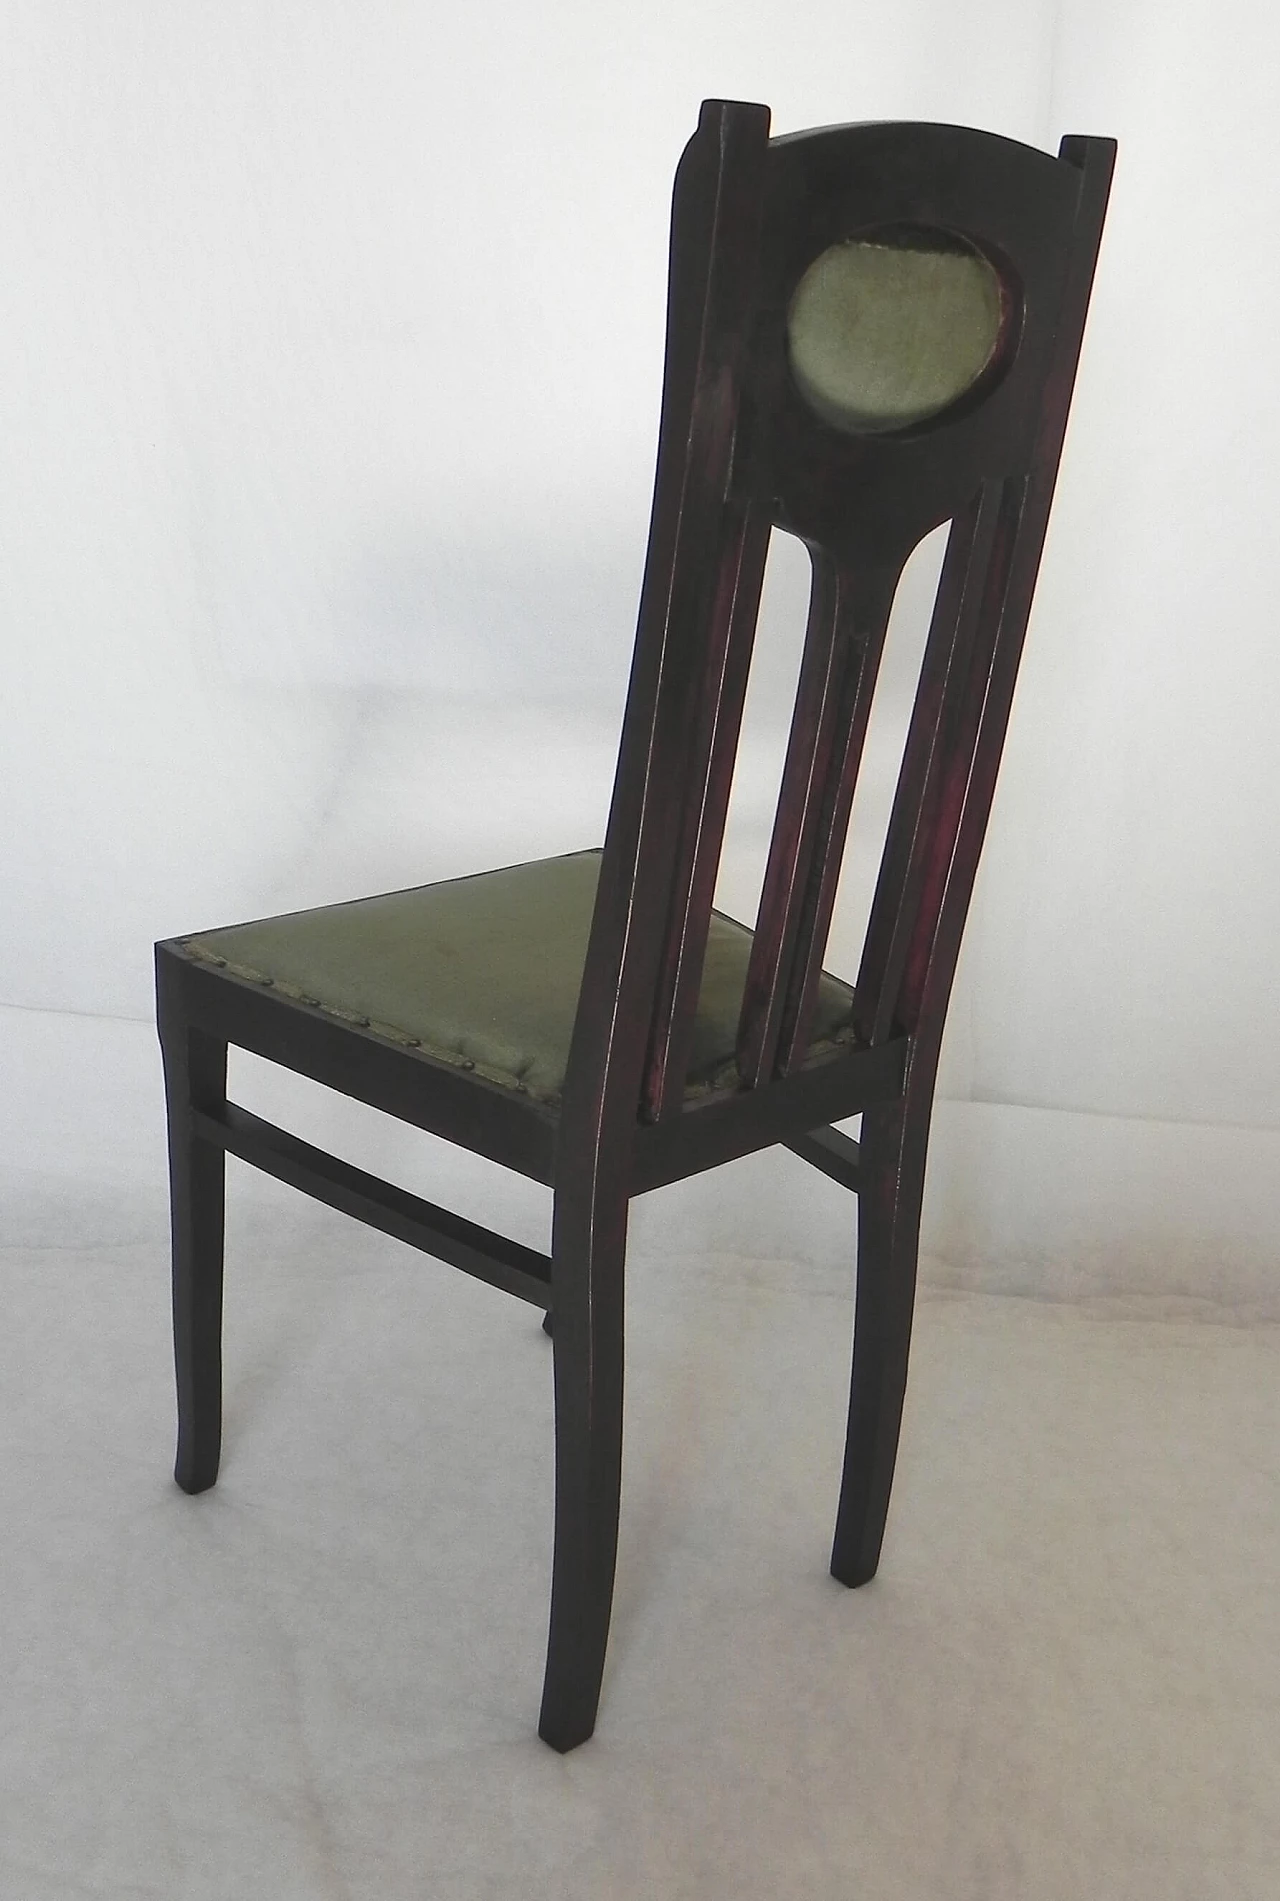 Mackintosh style chair, 1920s 1283316